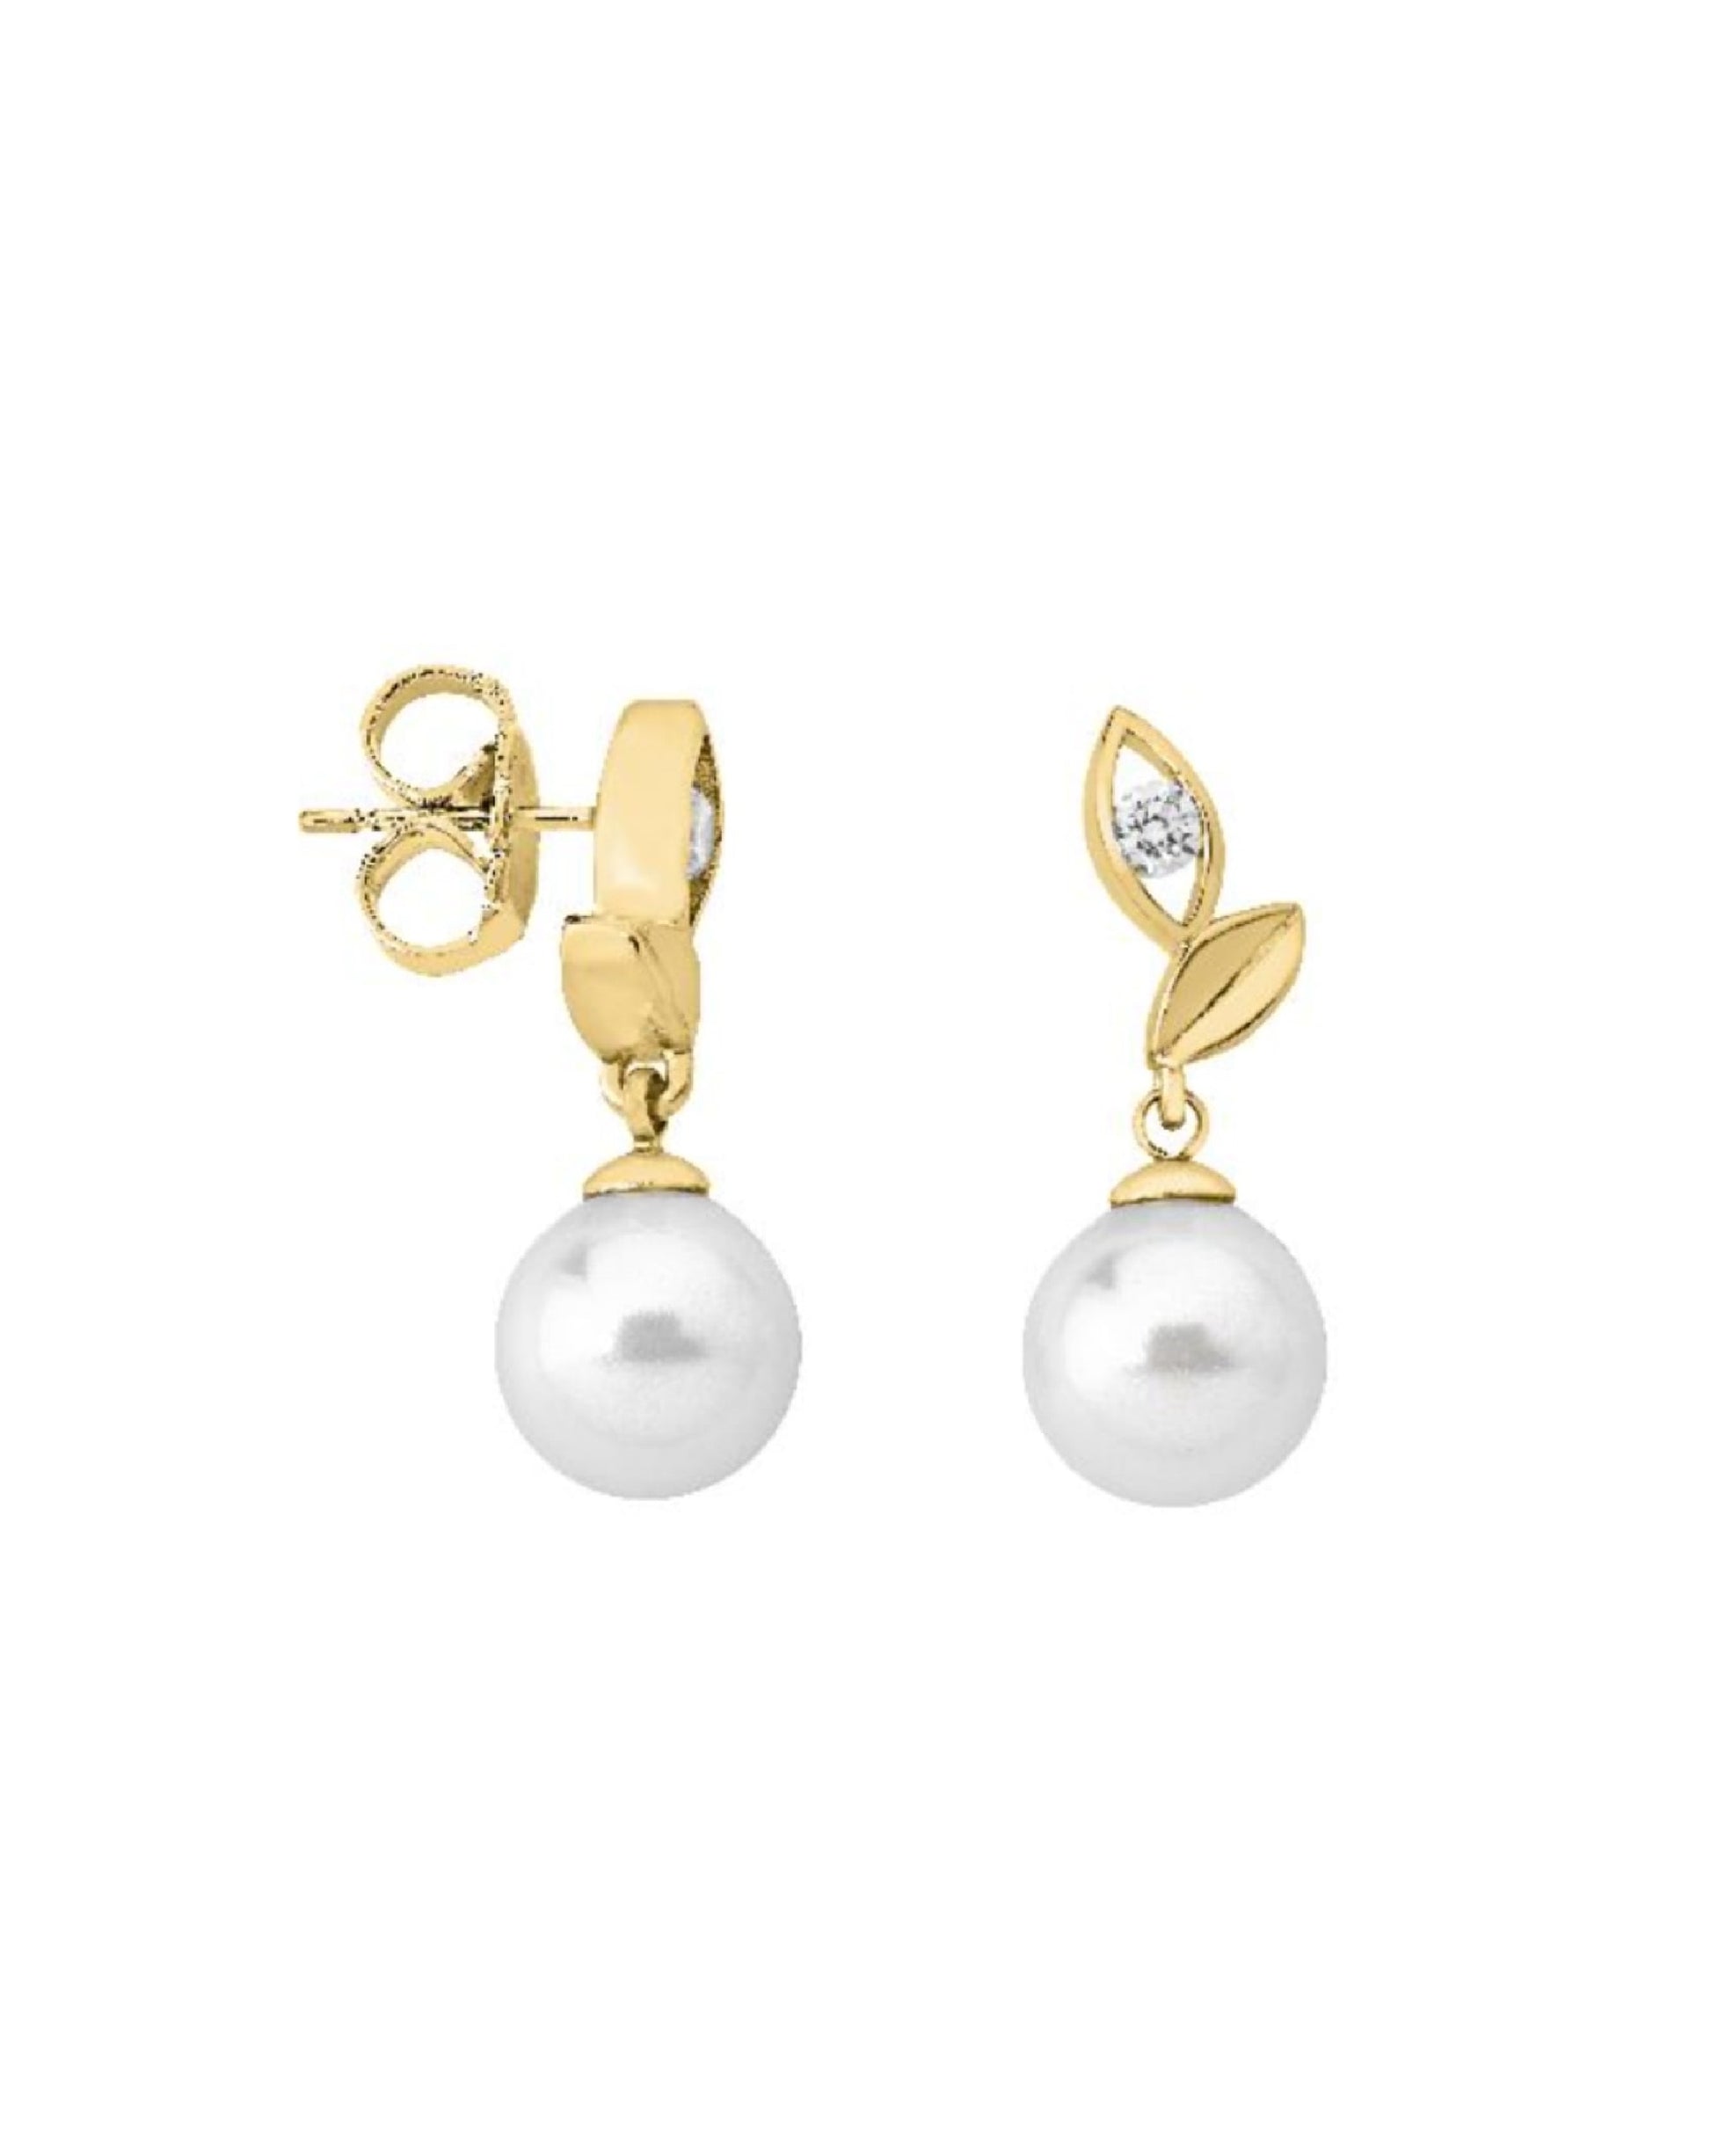 Majorica White Pearl Earring Heka, MAJ-773 Earrings